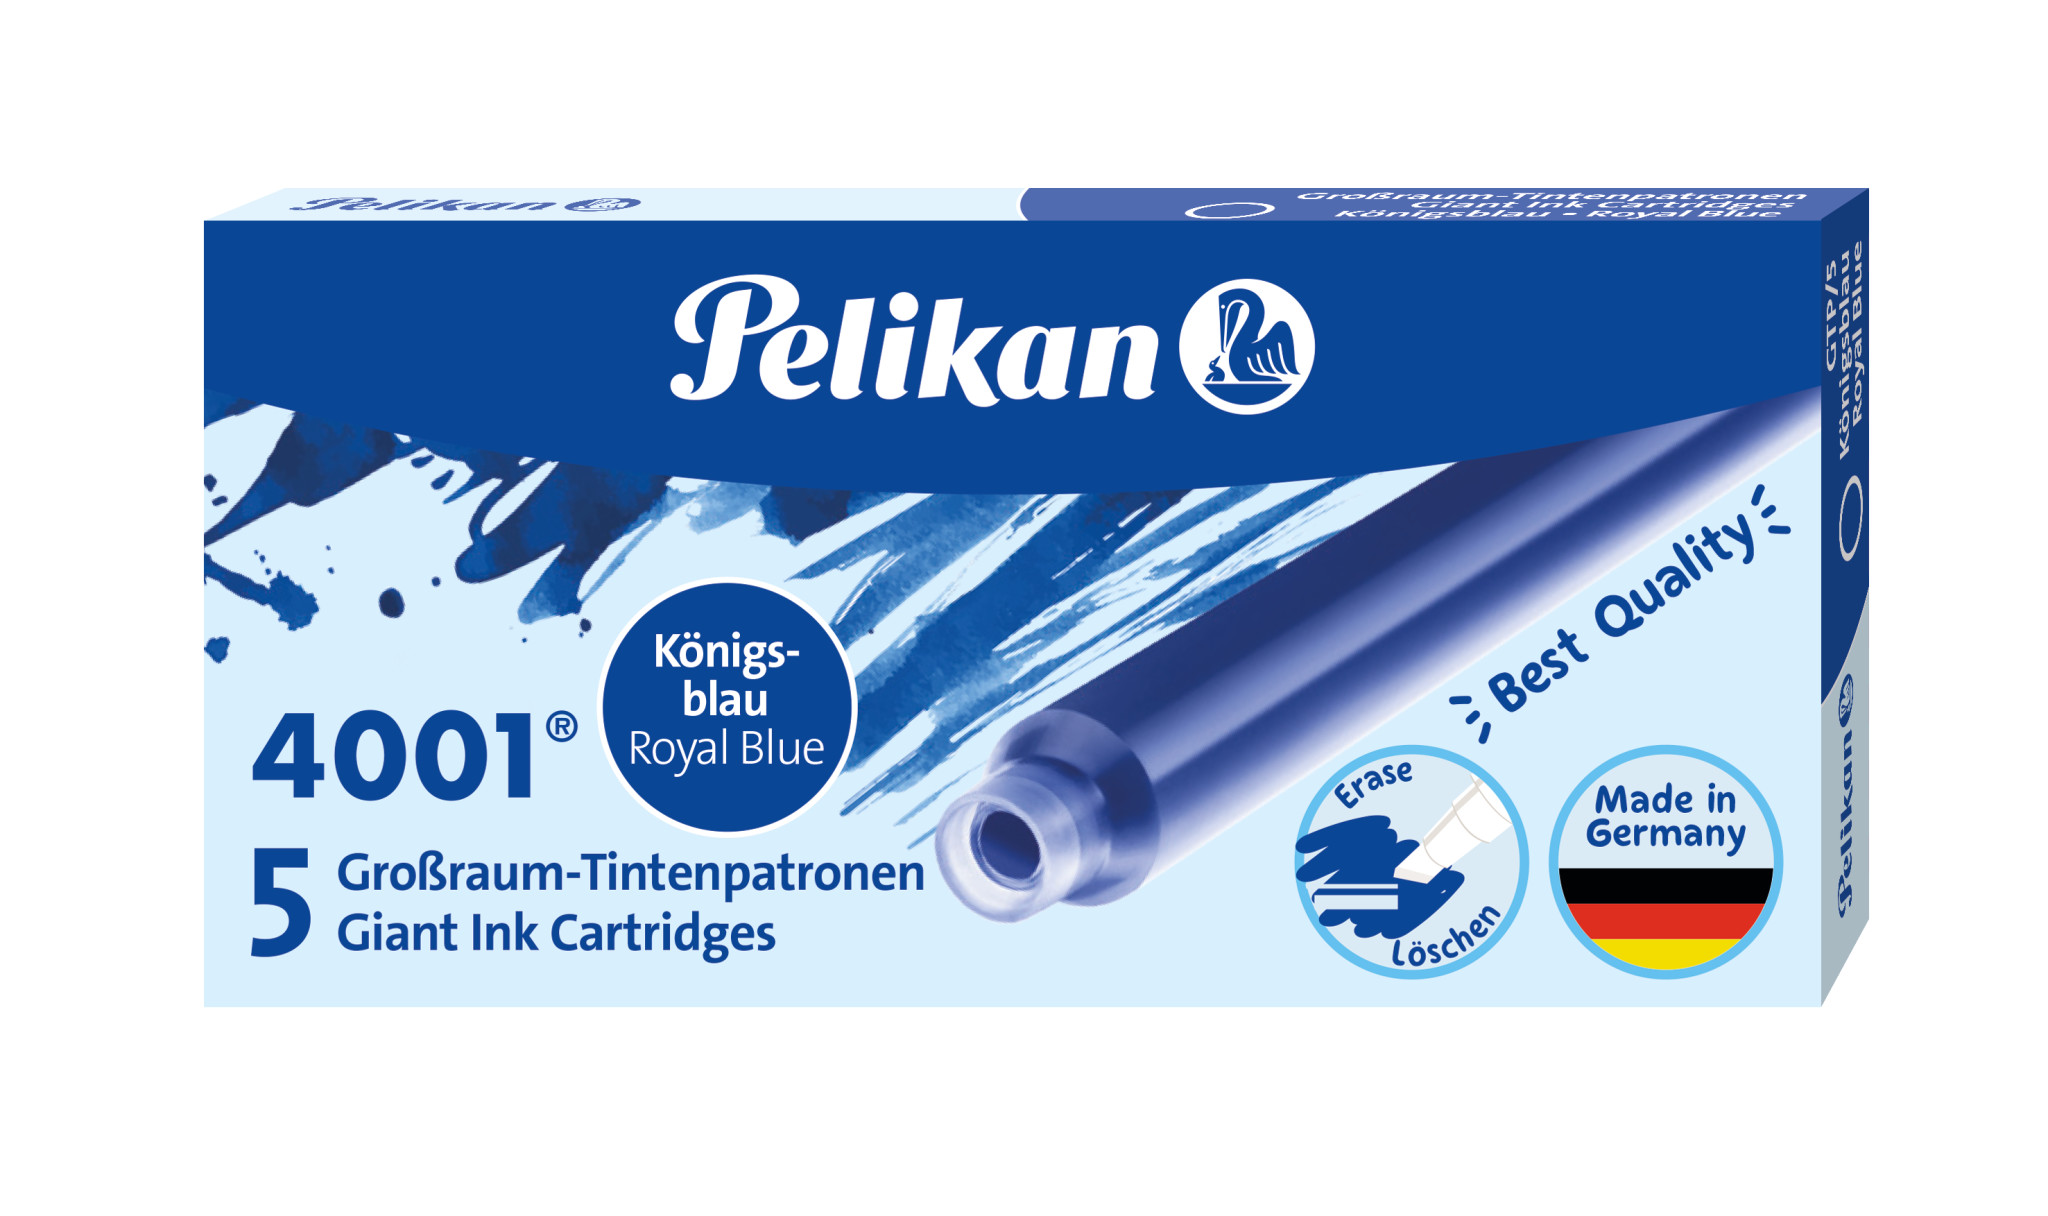 Pelikan - Großraum-Tintenpatrone 4001 GTP - 5 Stück - Königsblau